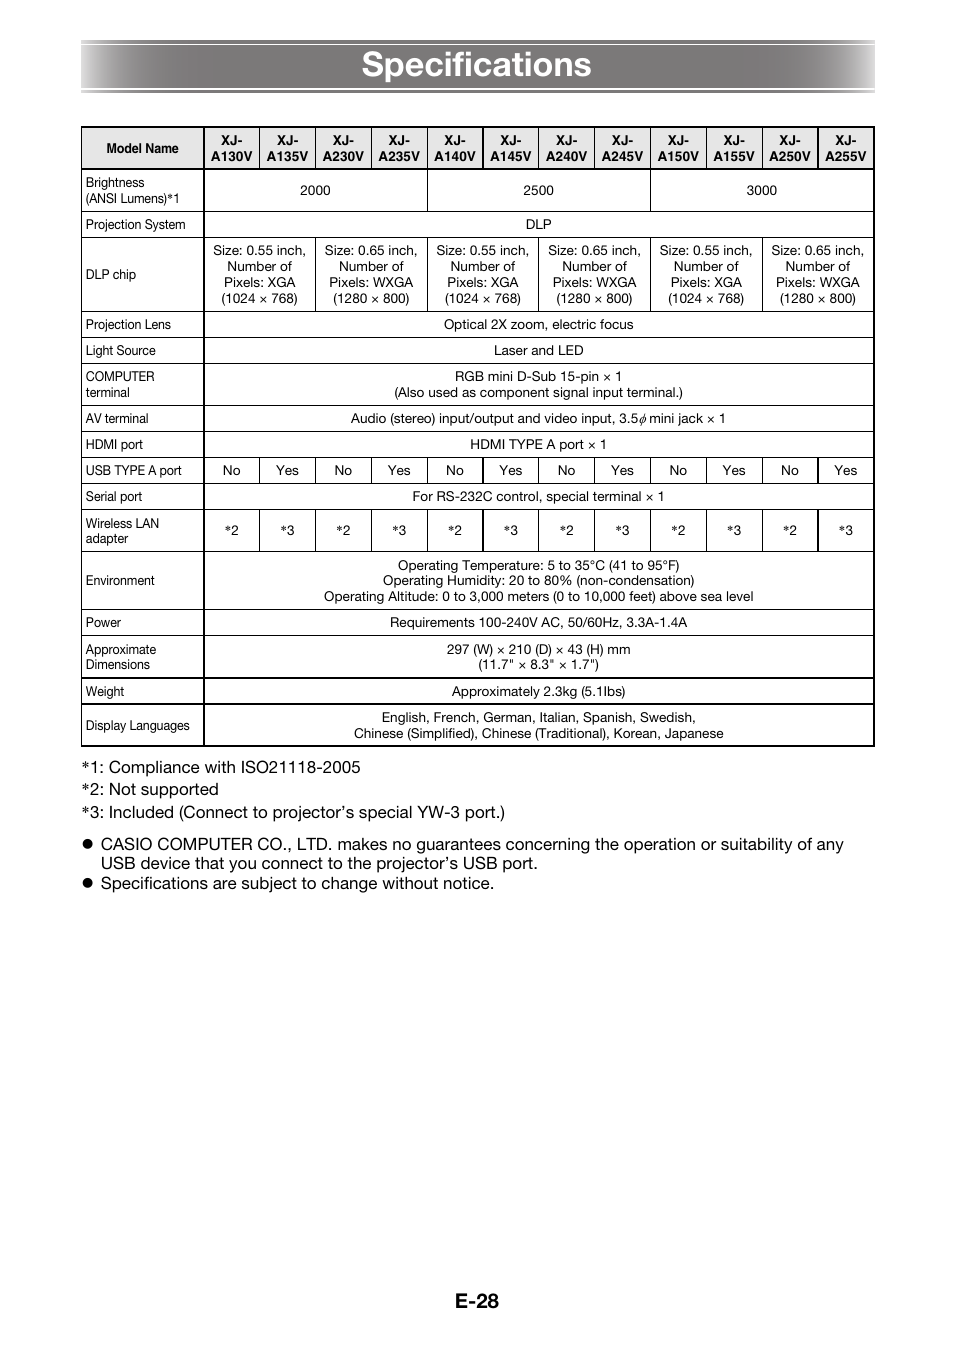 Specifications, E-28 | Casio XJ-A250V/XJ-A255V* User Manual | Page 29 / 38